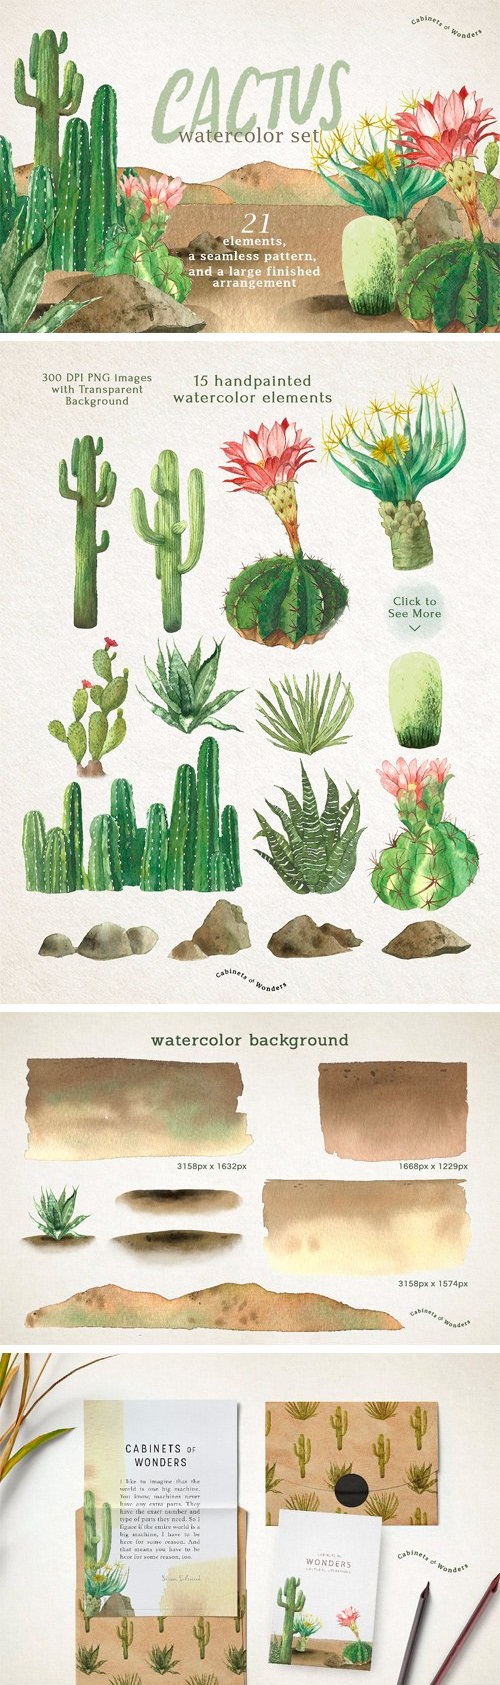 Cactus Watercolor Set - 2066730